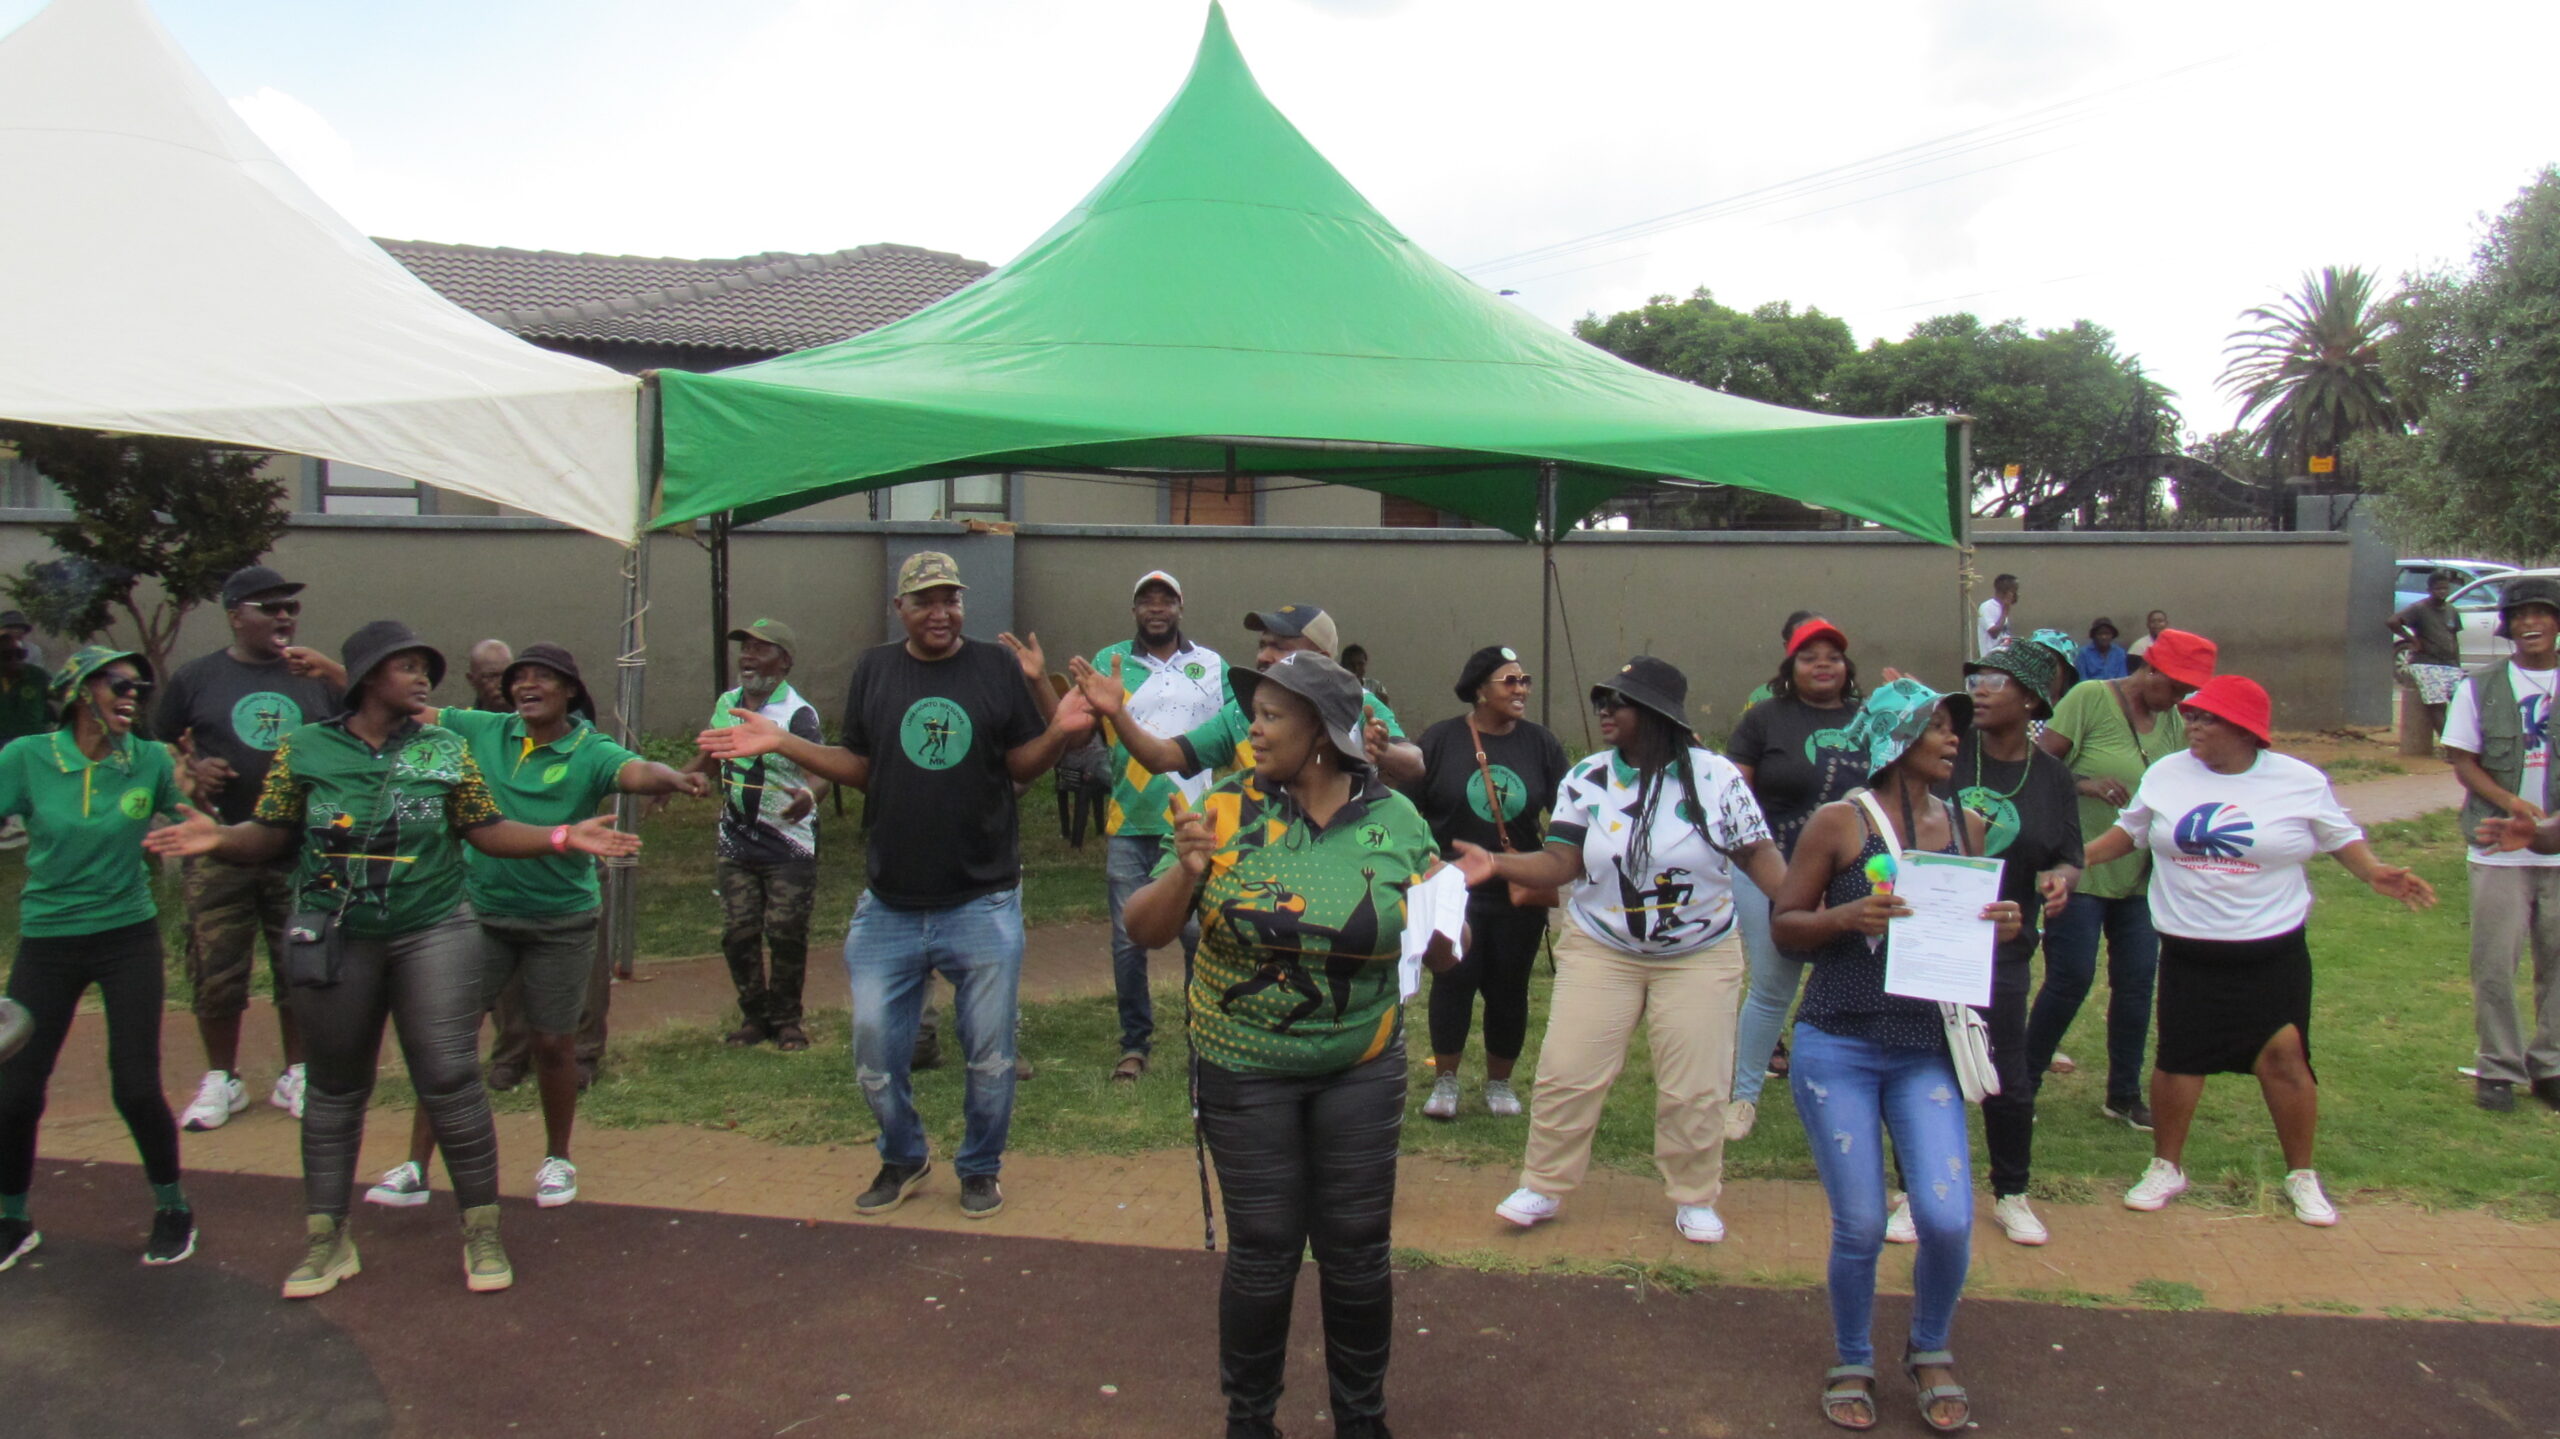 UMkhonto weSizwe party members in Atteridgeville, Tshwane celebrating at Dibango’s Park for contesting for national elections photo by Dimakatso Modipa